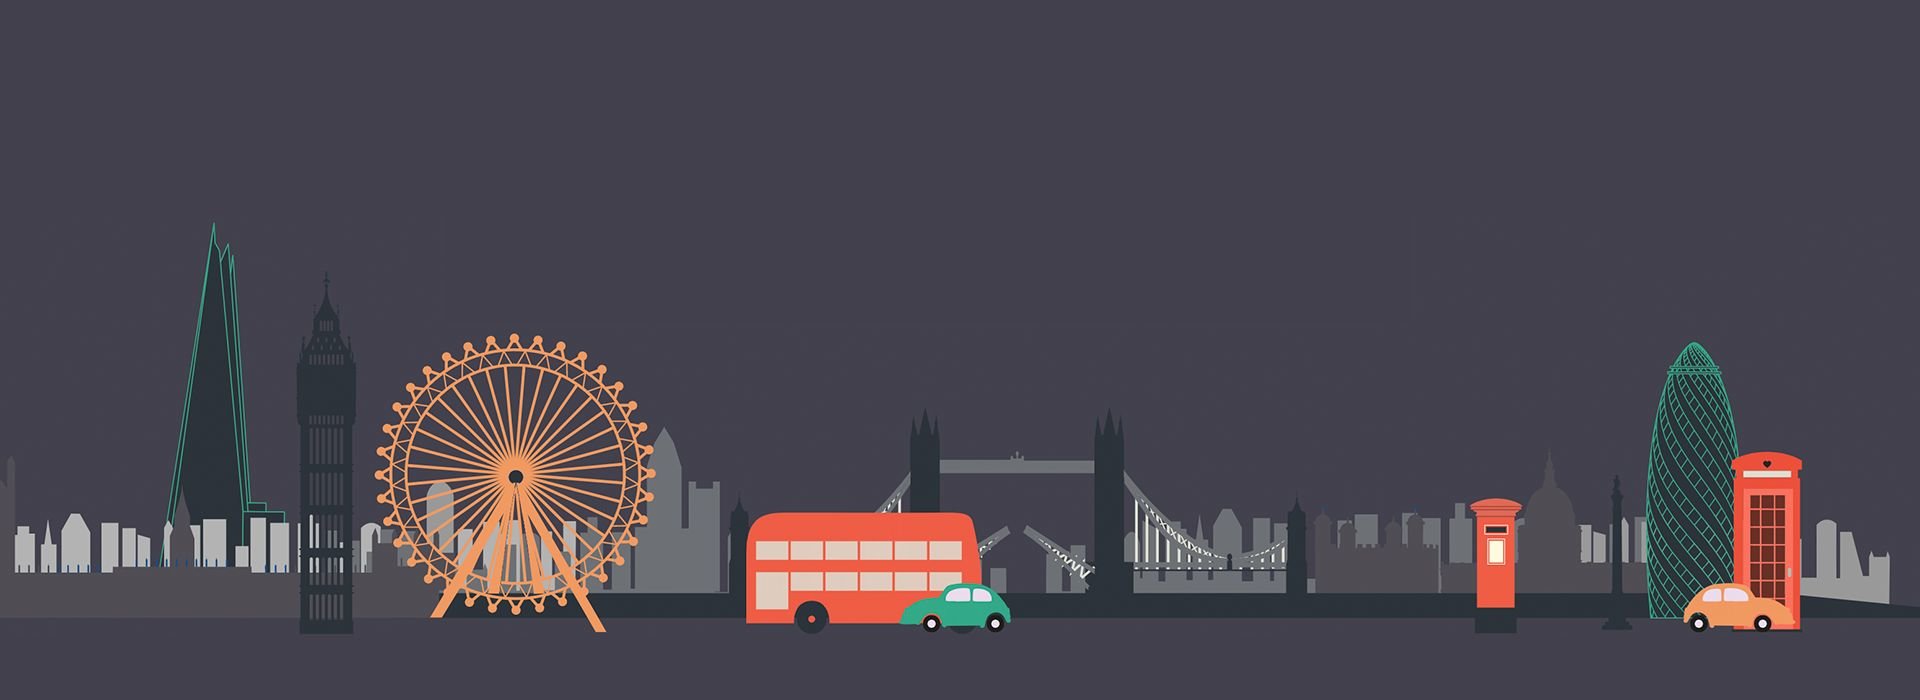 Cartoon view of London